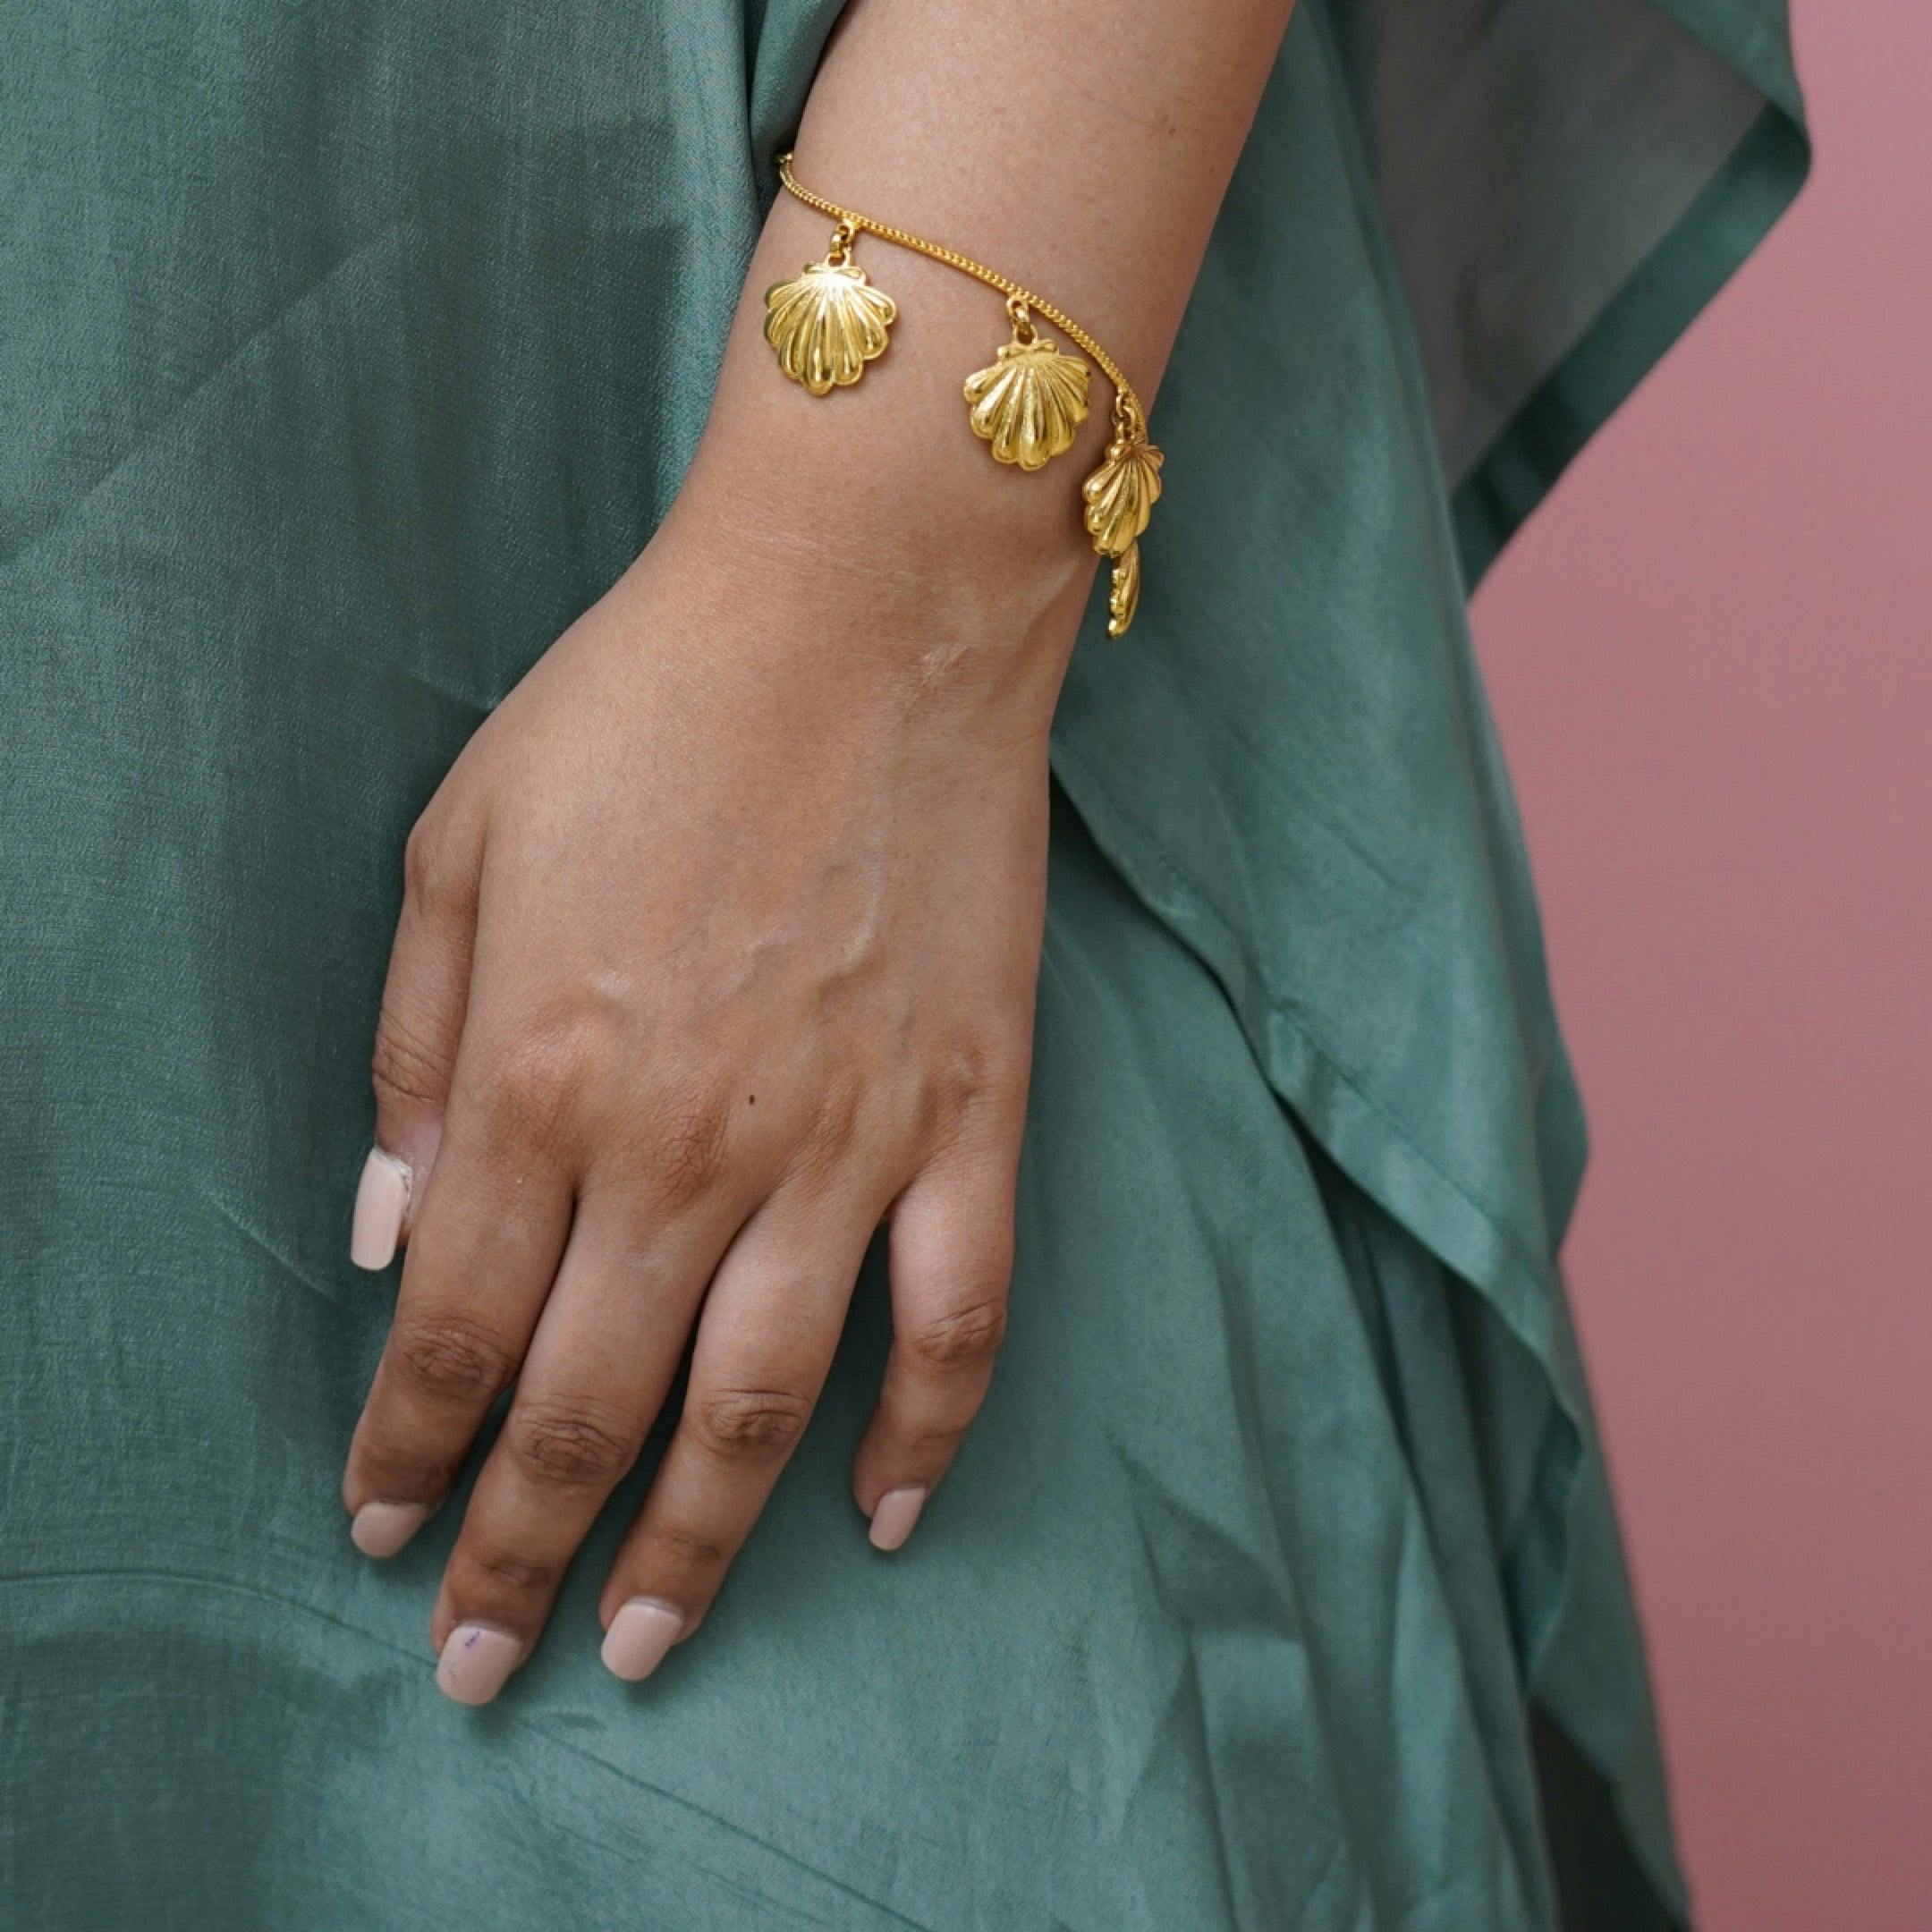 Seashell Bracelet, a product by Aditi Bhatt